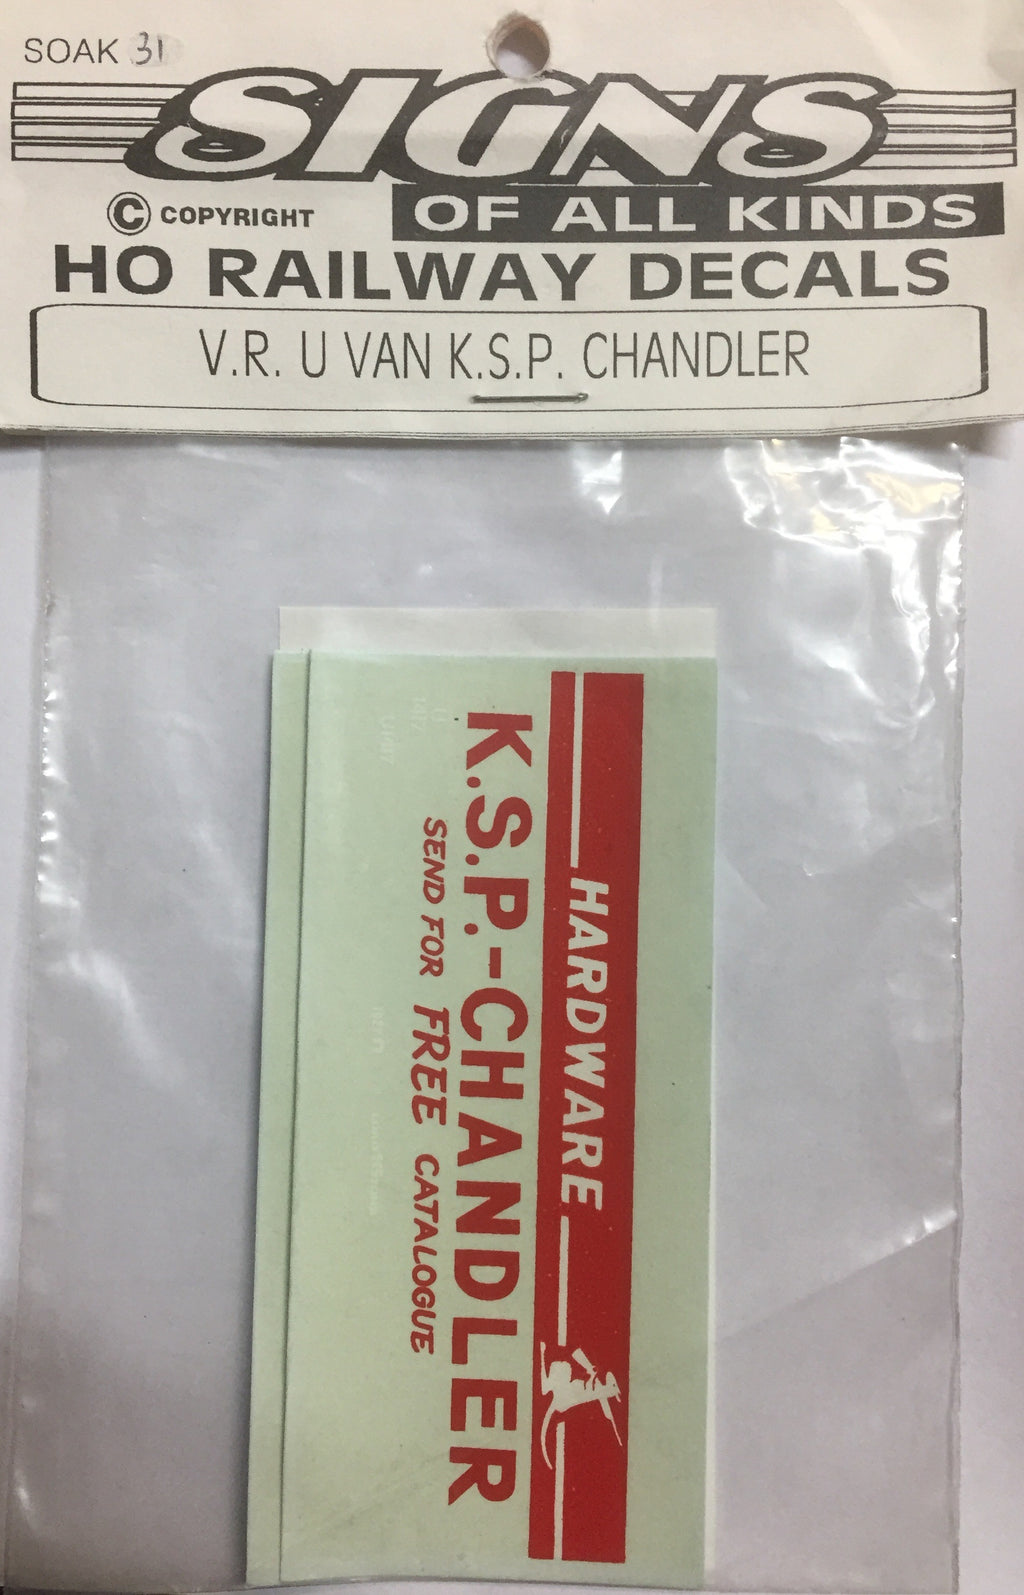 SOAK 31 - U VAN SOAK  Decal Vic, Rail "K.S.P. CHANDLER" HO